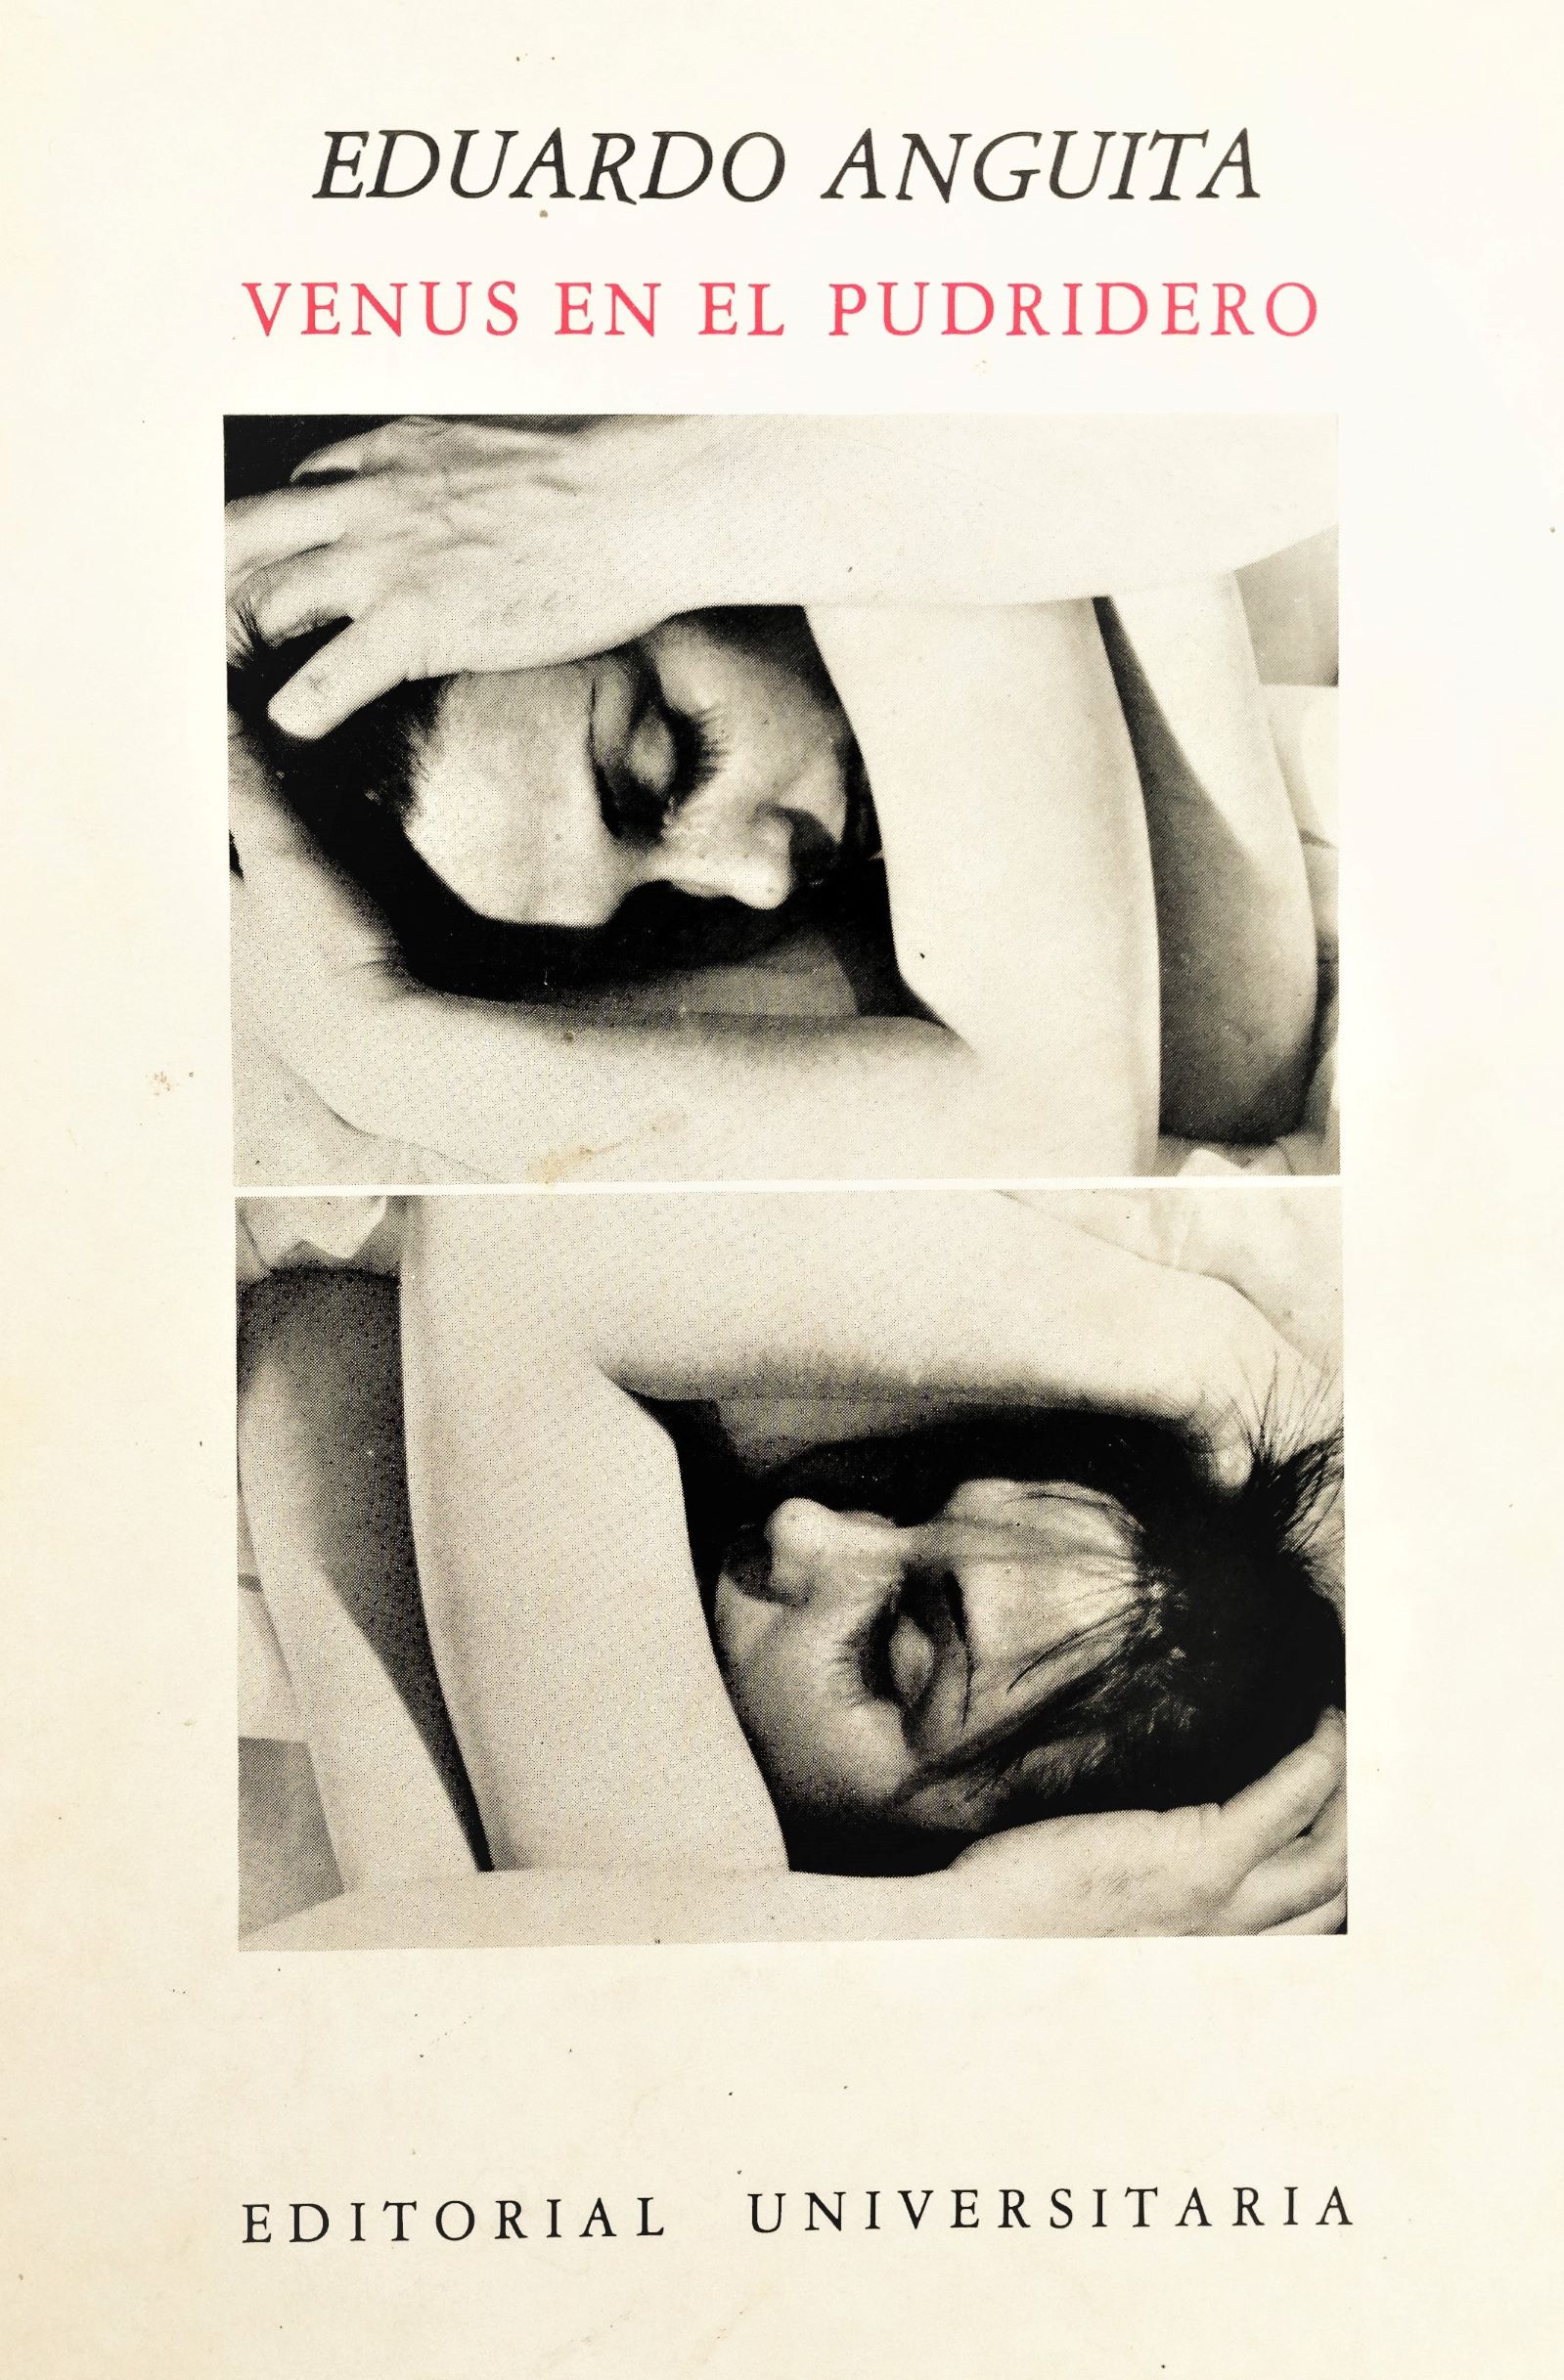 Eduardo Anguita - Venus en el pudridero